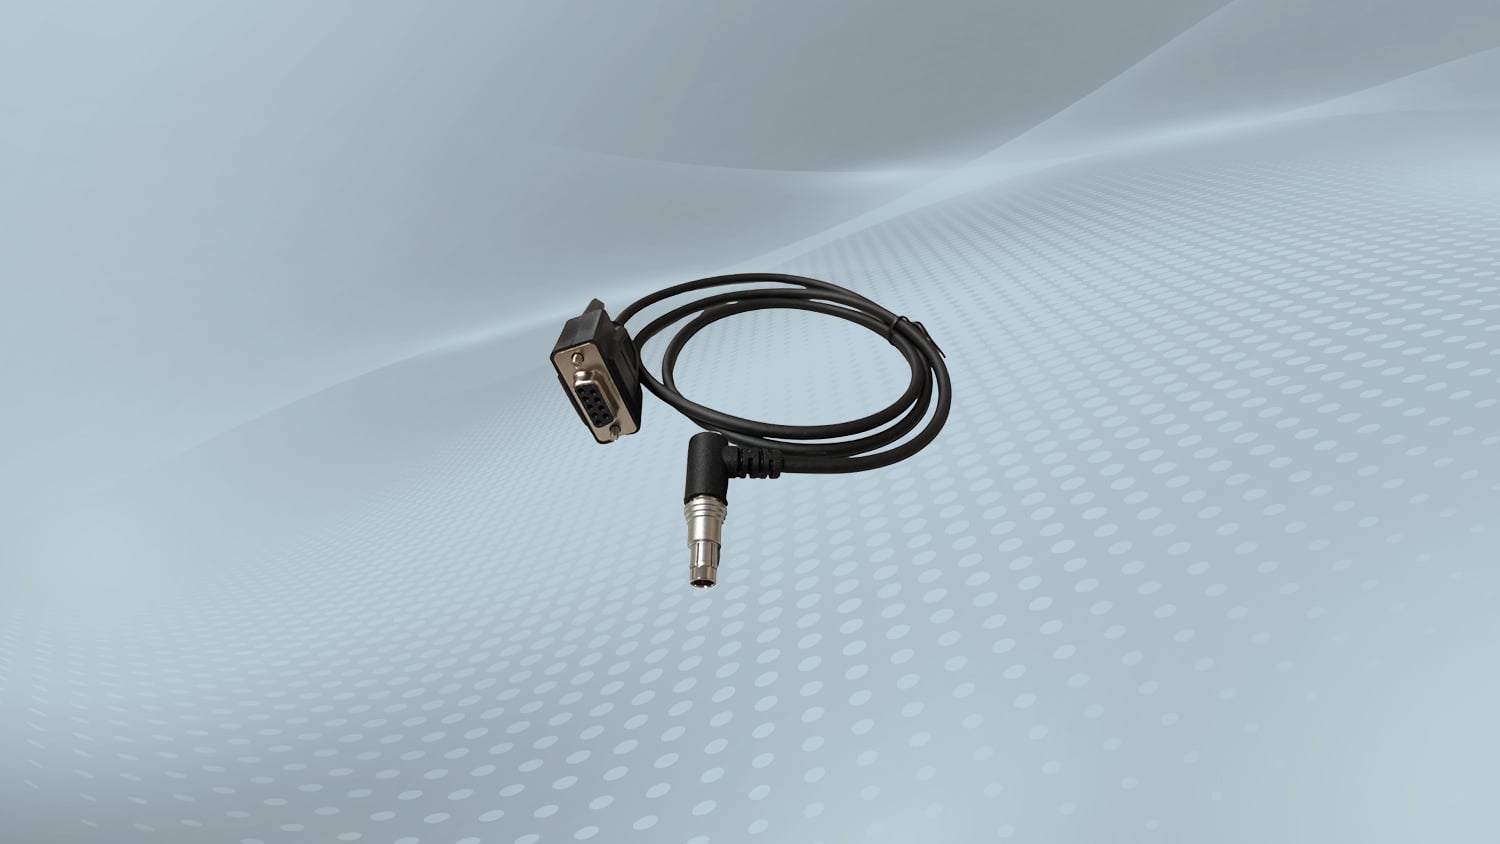 1m Arrow Serial DB9 Cable for external devices Eos Arrow GPS GIS GNSS